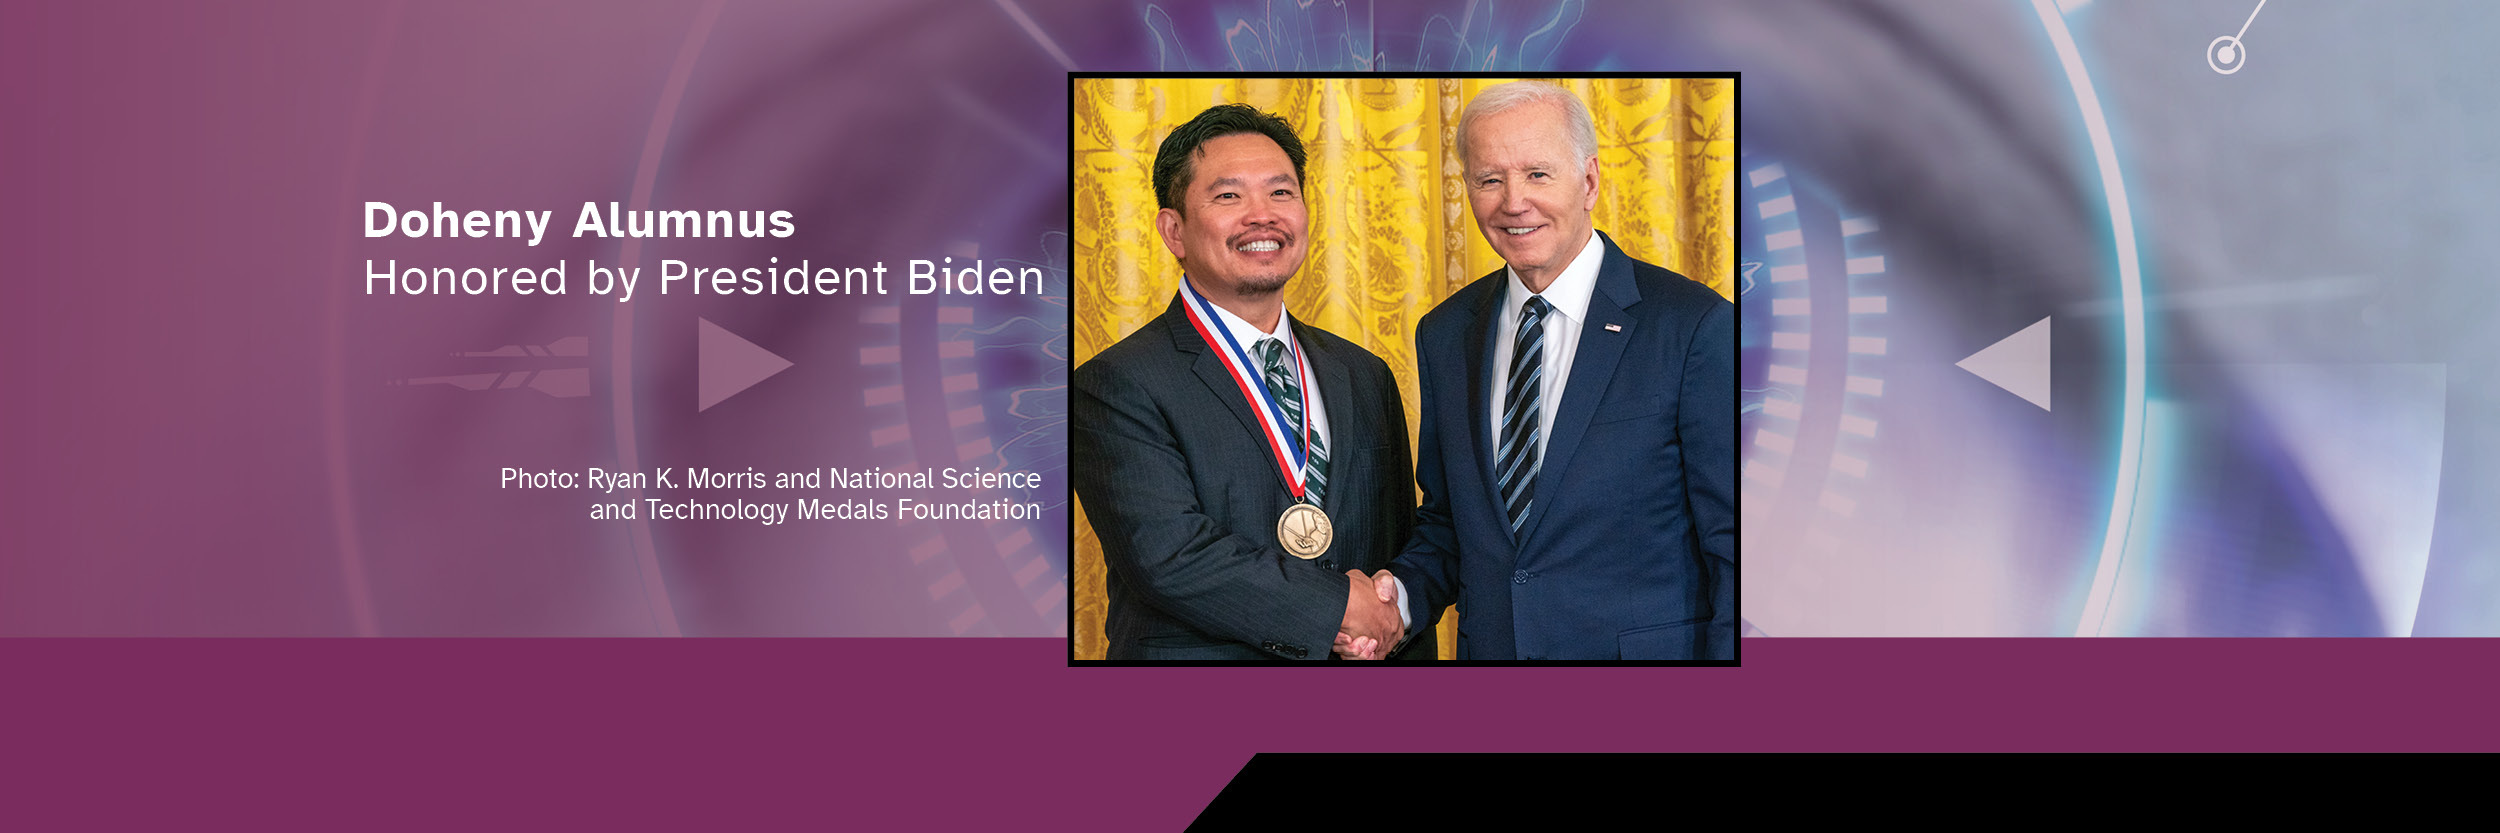 Doheny Alumnus Honored by President Biden